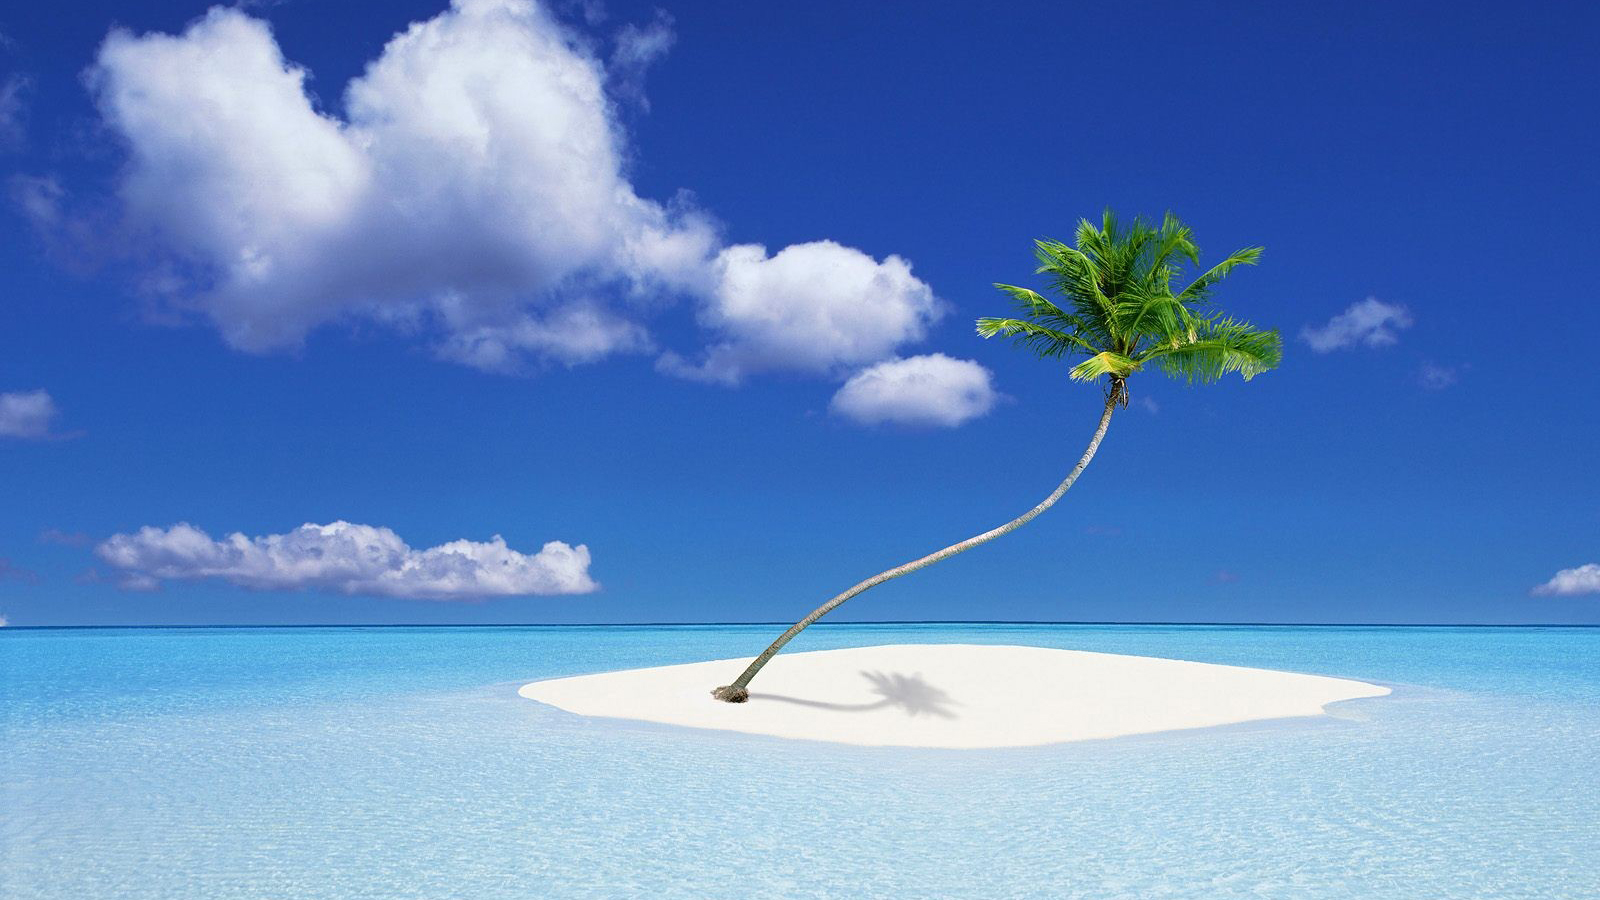 General 1600x900 blue sea island palm trees clouds sand horizon sky water sunlight